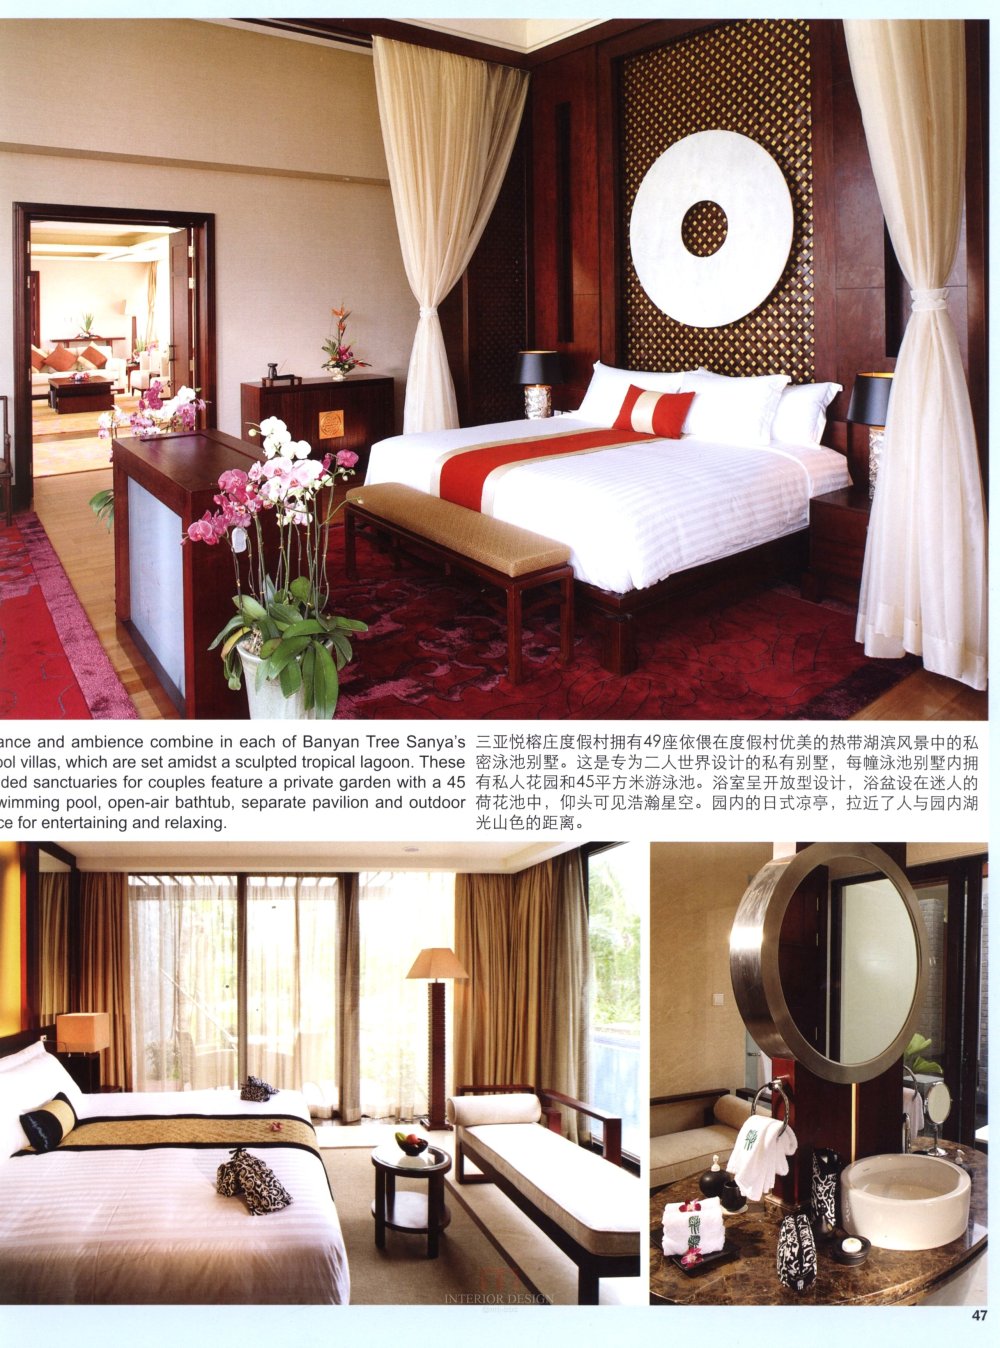 101全球酒店客房 101HOTELS GUEST ROOMS_图站_AiJpgg_com_042.jpg